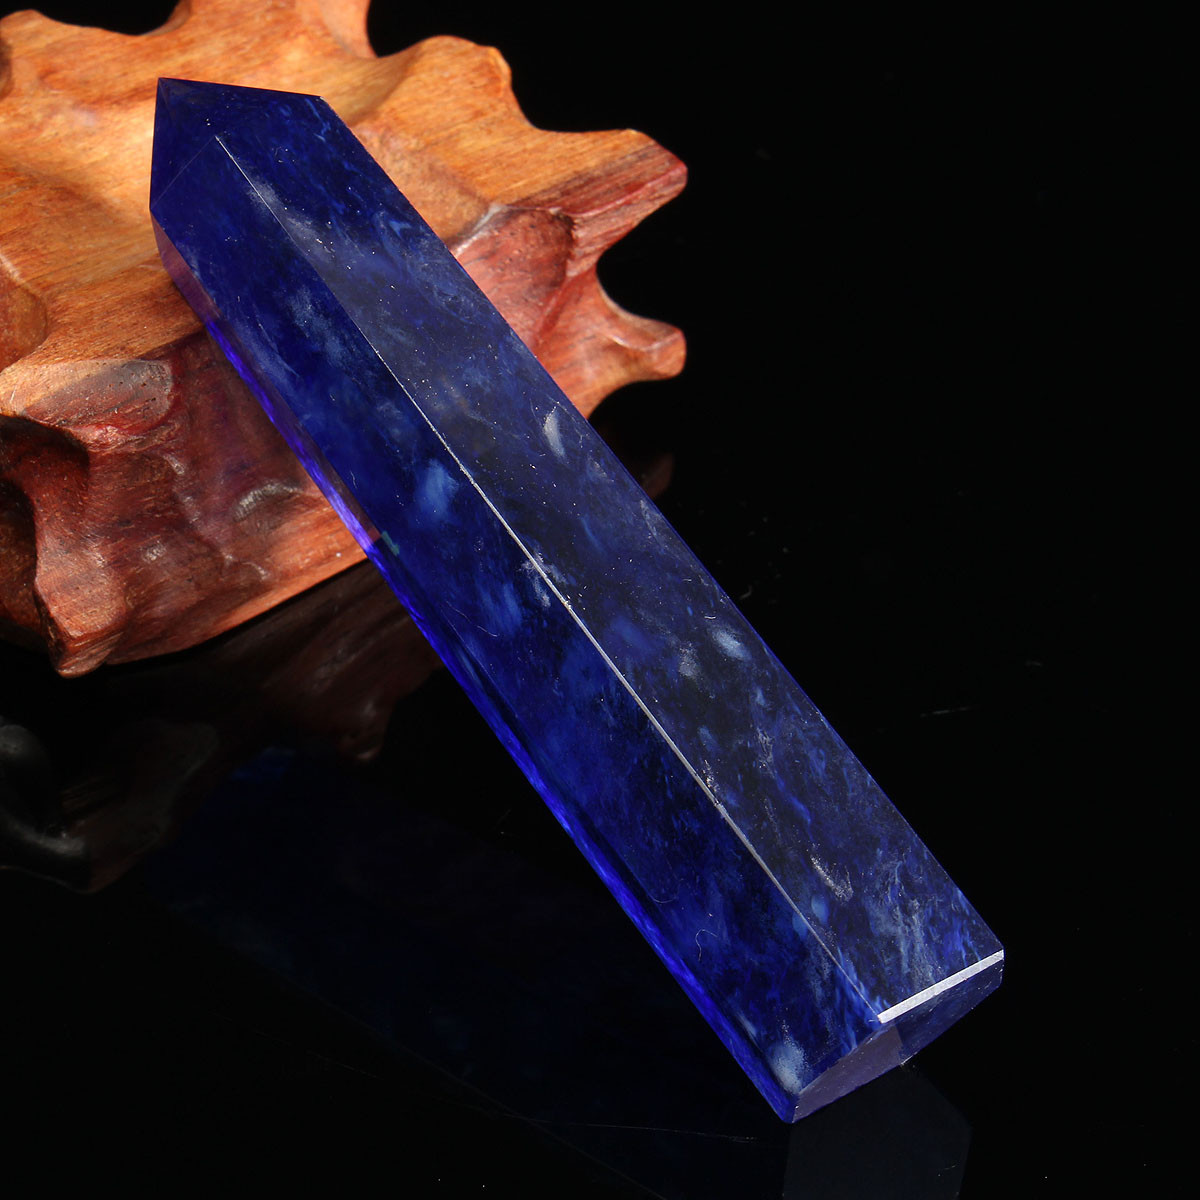 Blue Quartz Healing Mineral Specimens Jewelry Accessories Decoration Craft